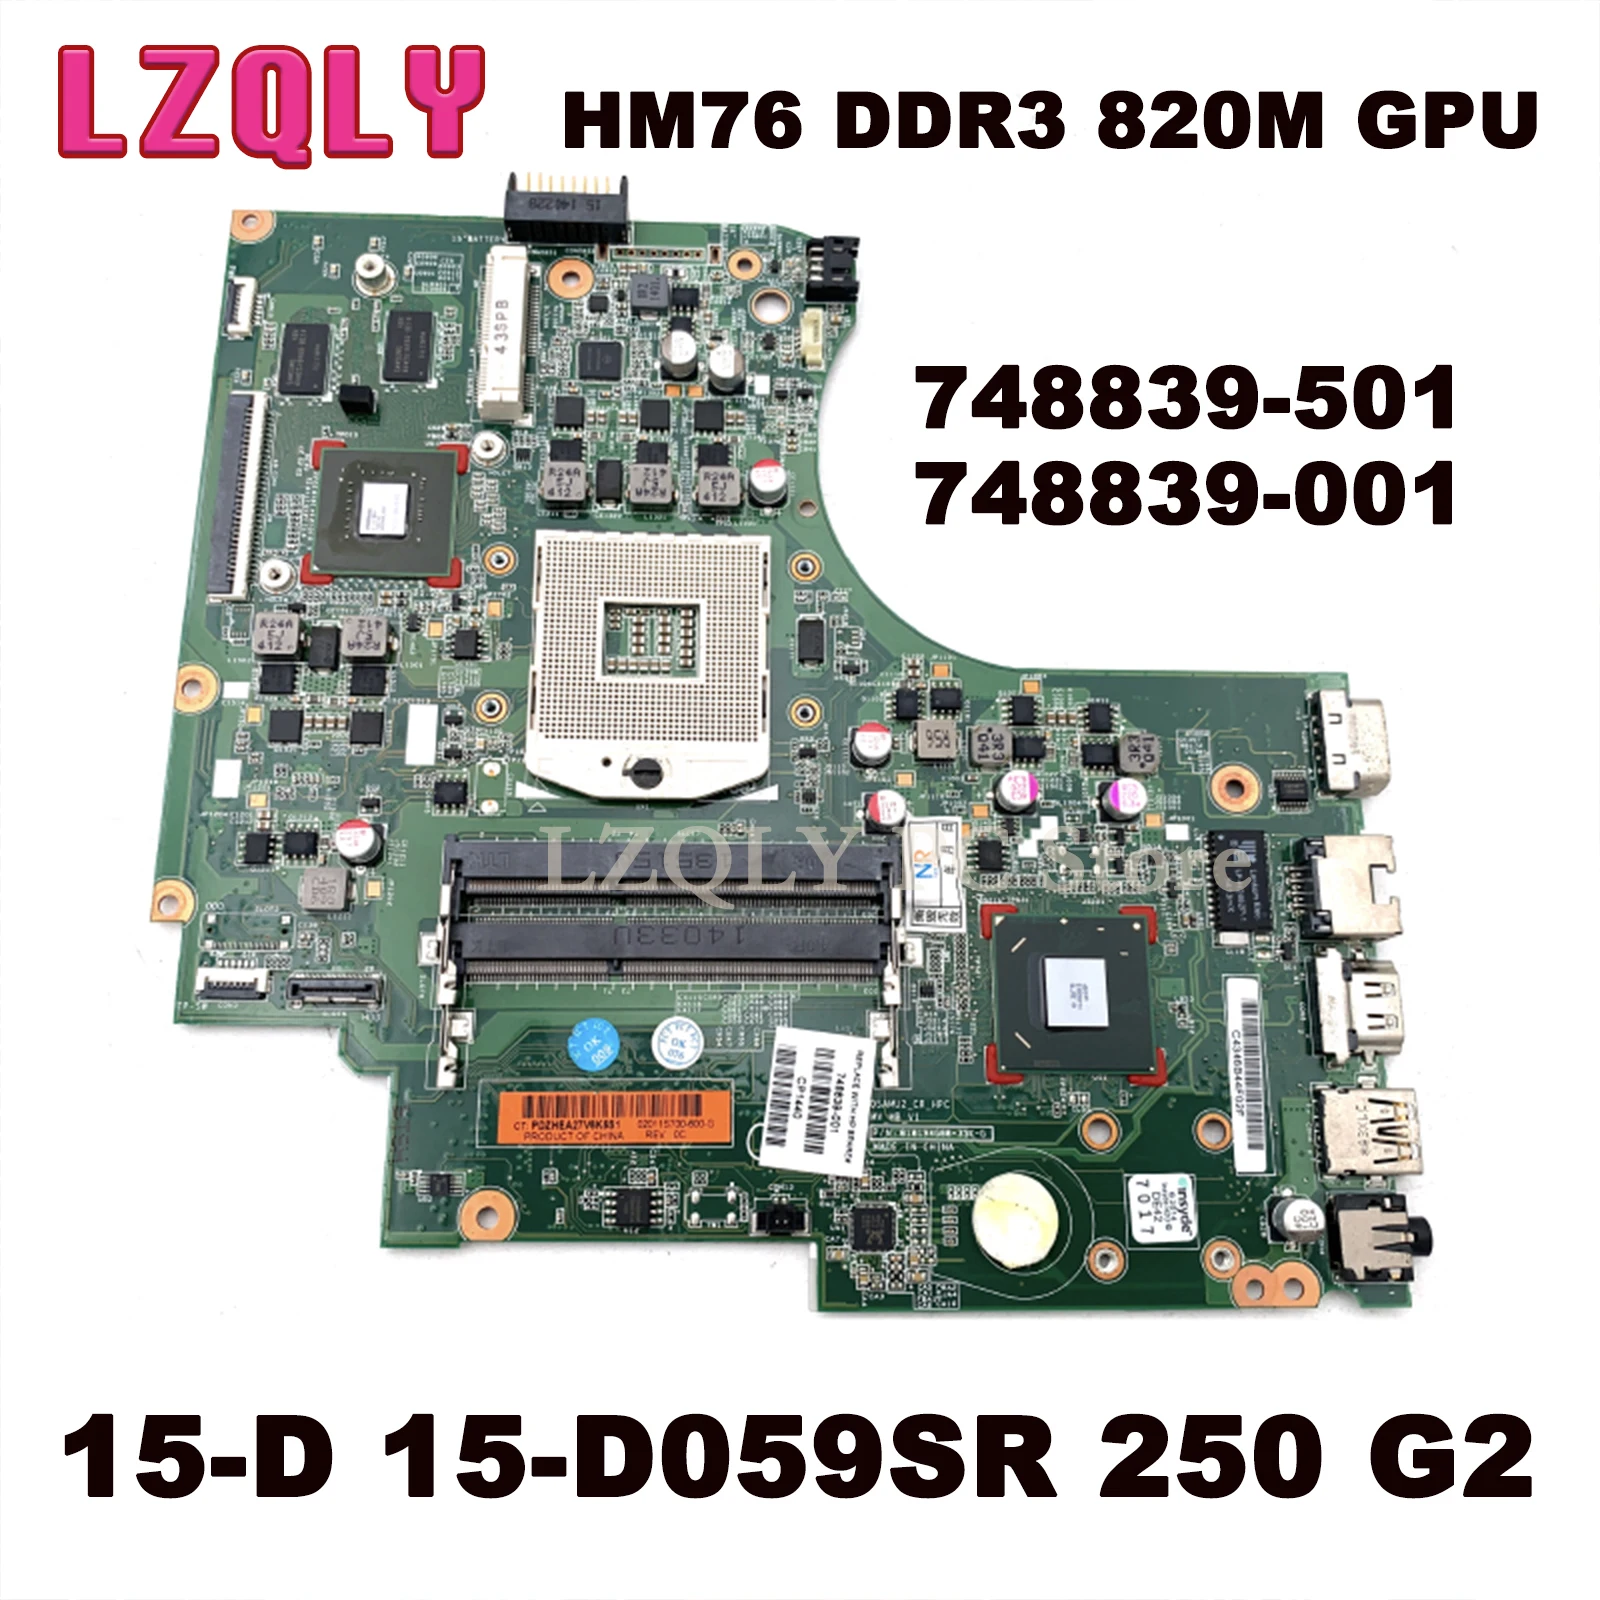 LZQLY For HP 15-D 15-D059SR 250 G2 748839-501 748839-001 Laptop Motherboard HM76 DDR3 820M GPU MAIN BOARD Full Test